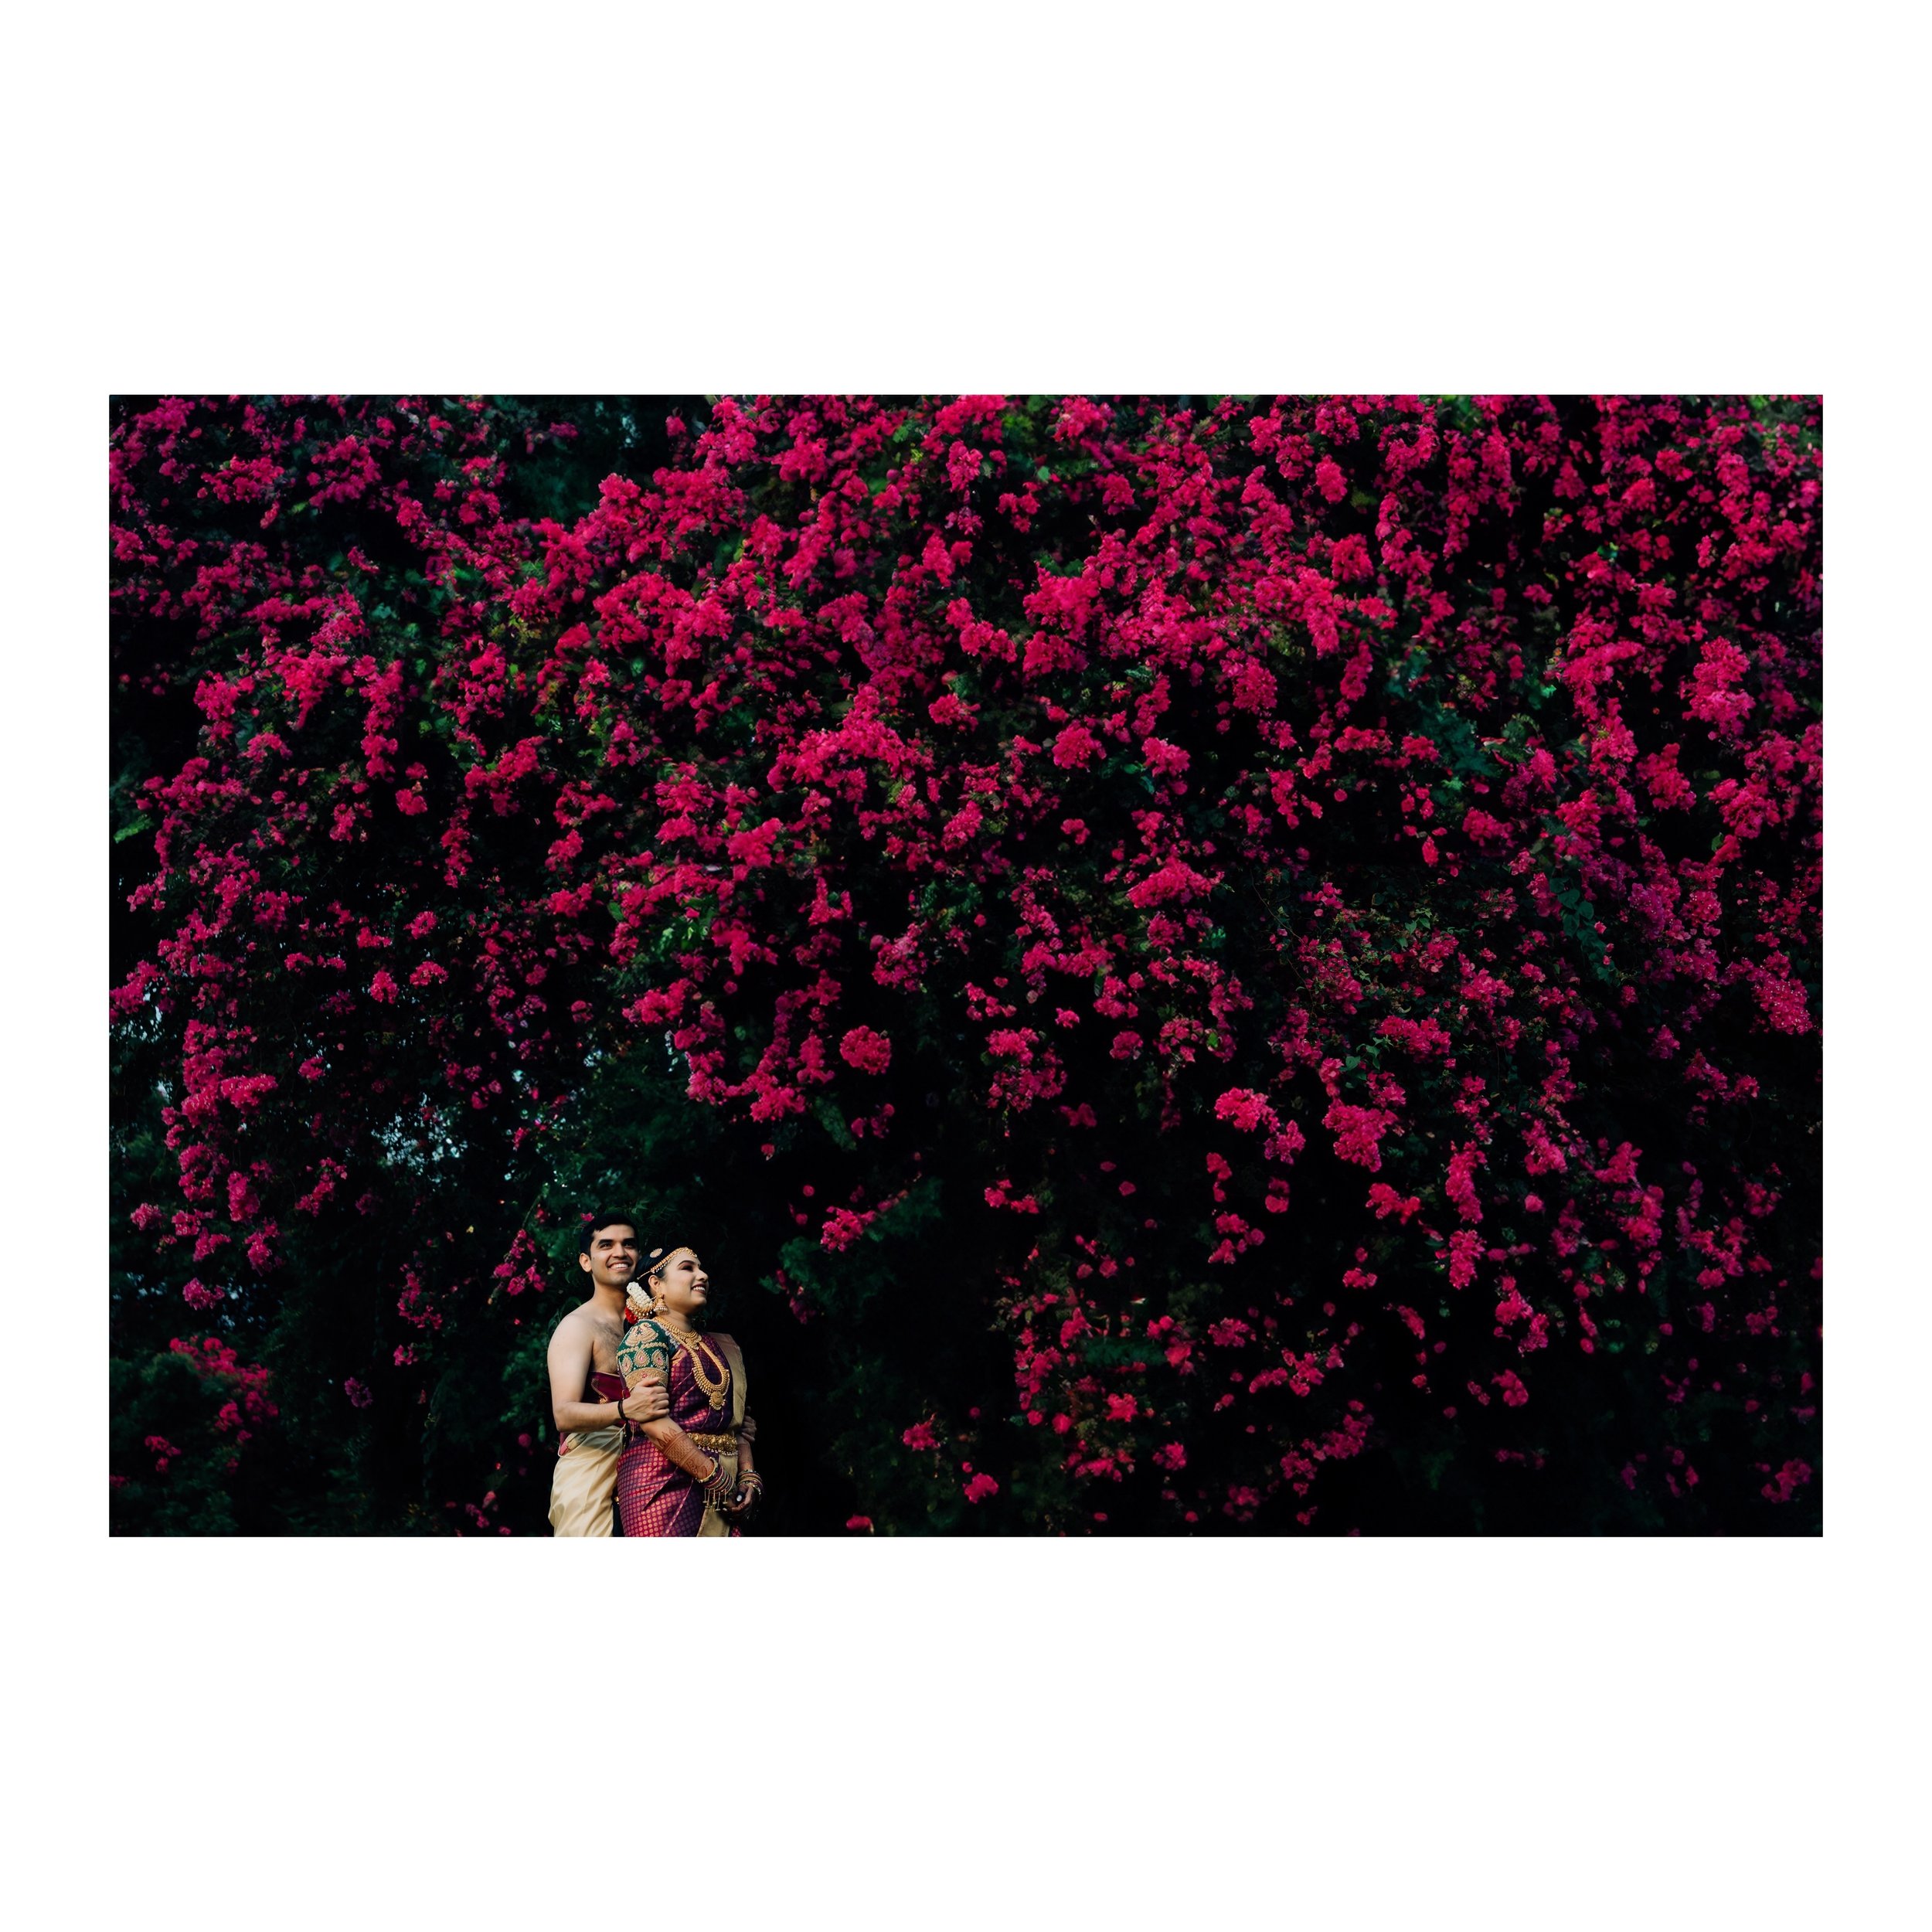 JANANI + ASHISH + BOUGAINVILLEAS

A stunning pre-wedding portrait of Janani and Ashish, captured amidst a vibrant pink Bougainvillea tree. Love in full bloom. 🌸

#PreWeddingPortrait #LoveInBloom #BougainvilleaMagic #WeddingPhotography #JananiAndAshi